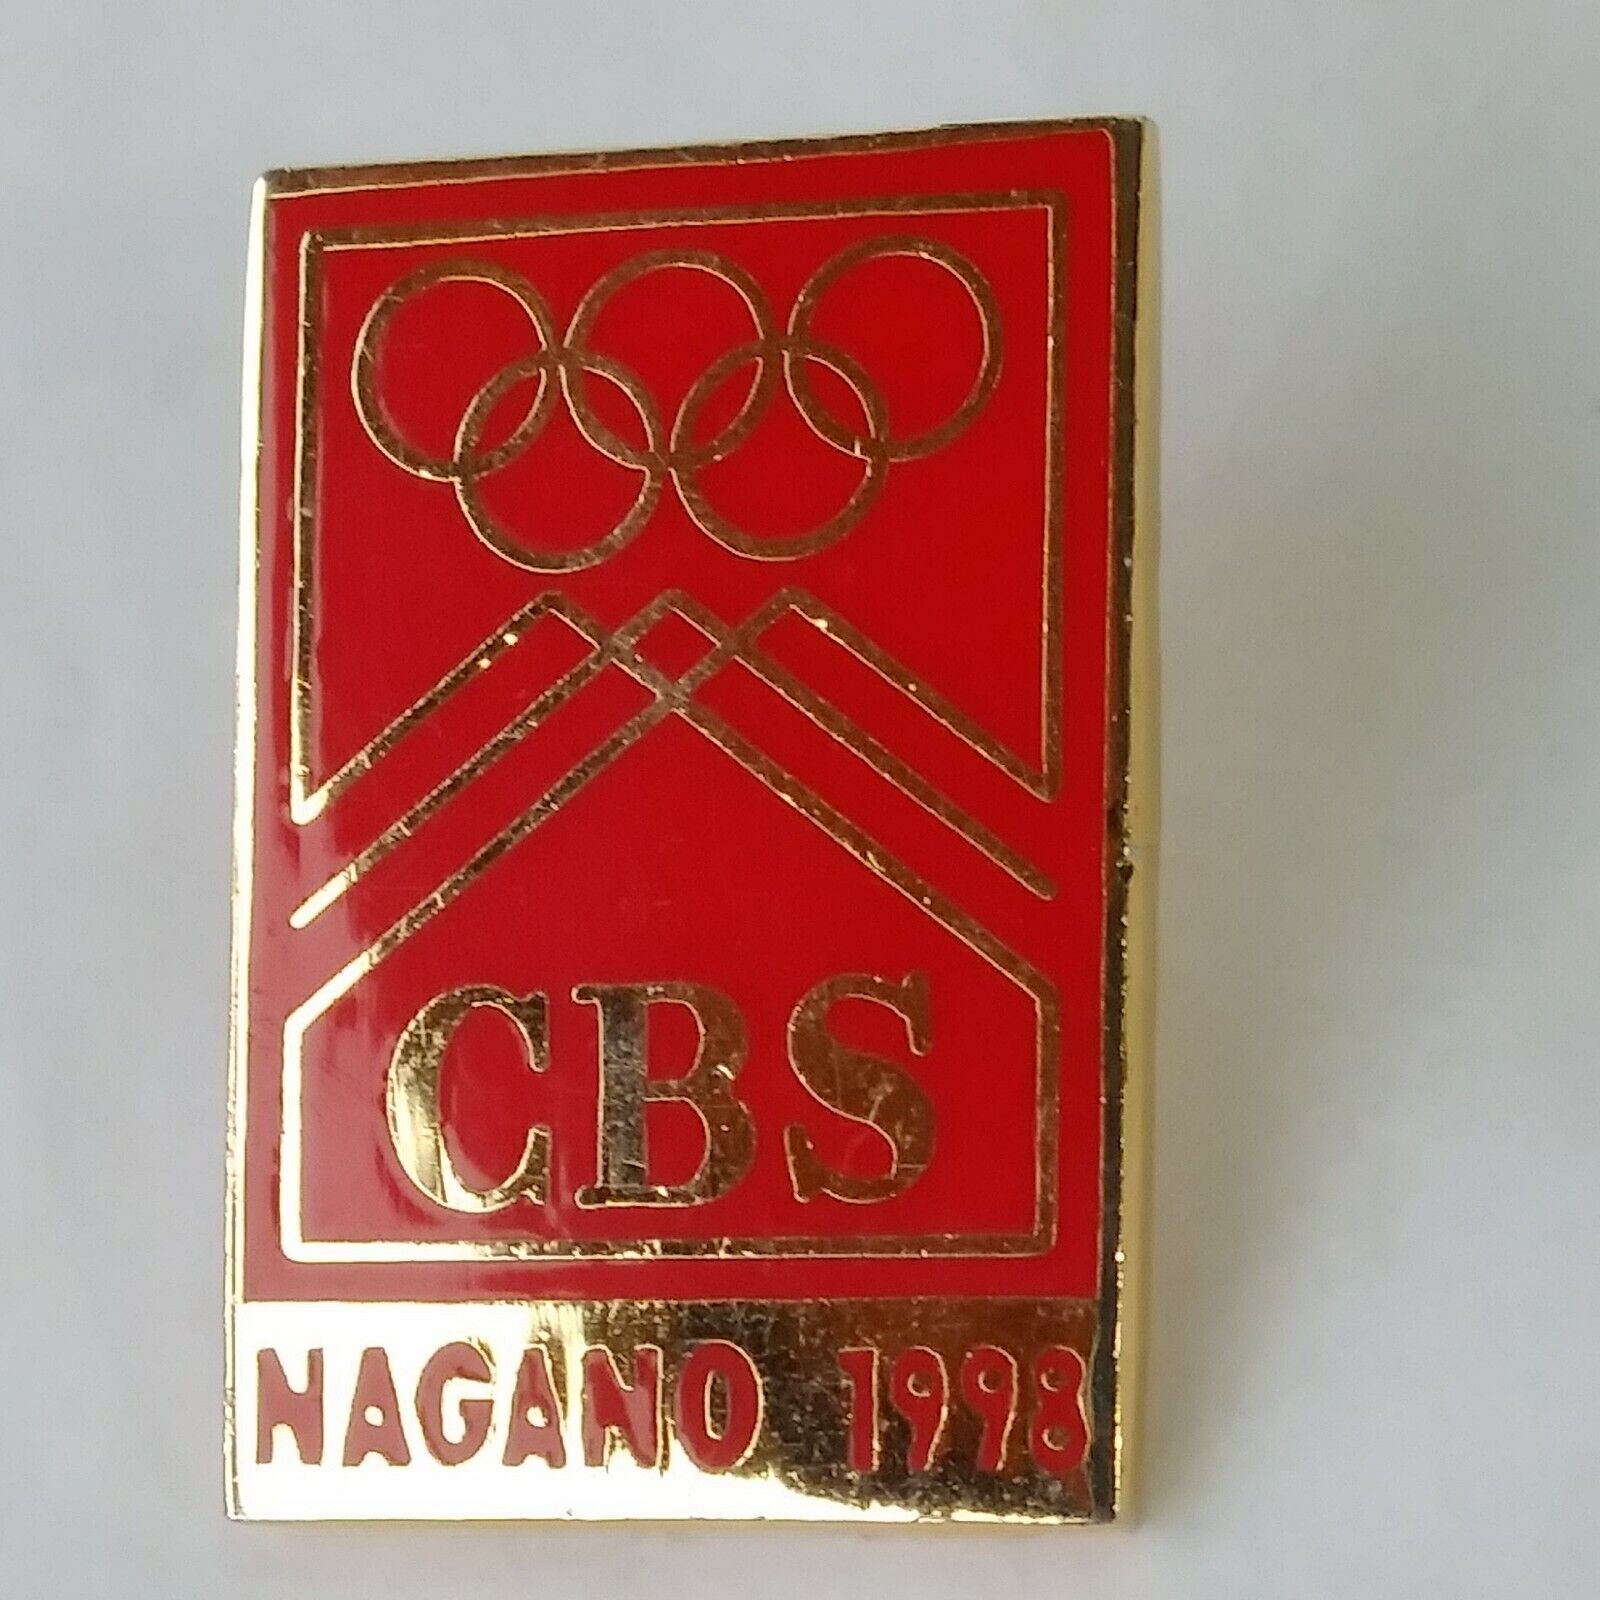 CBS Nagano 1998 Lapel Pin  XVII Olympic Winter Games Japan